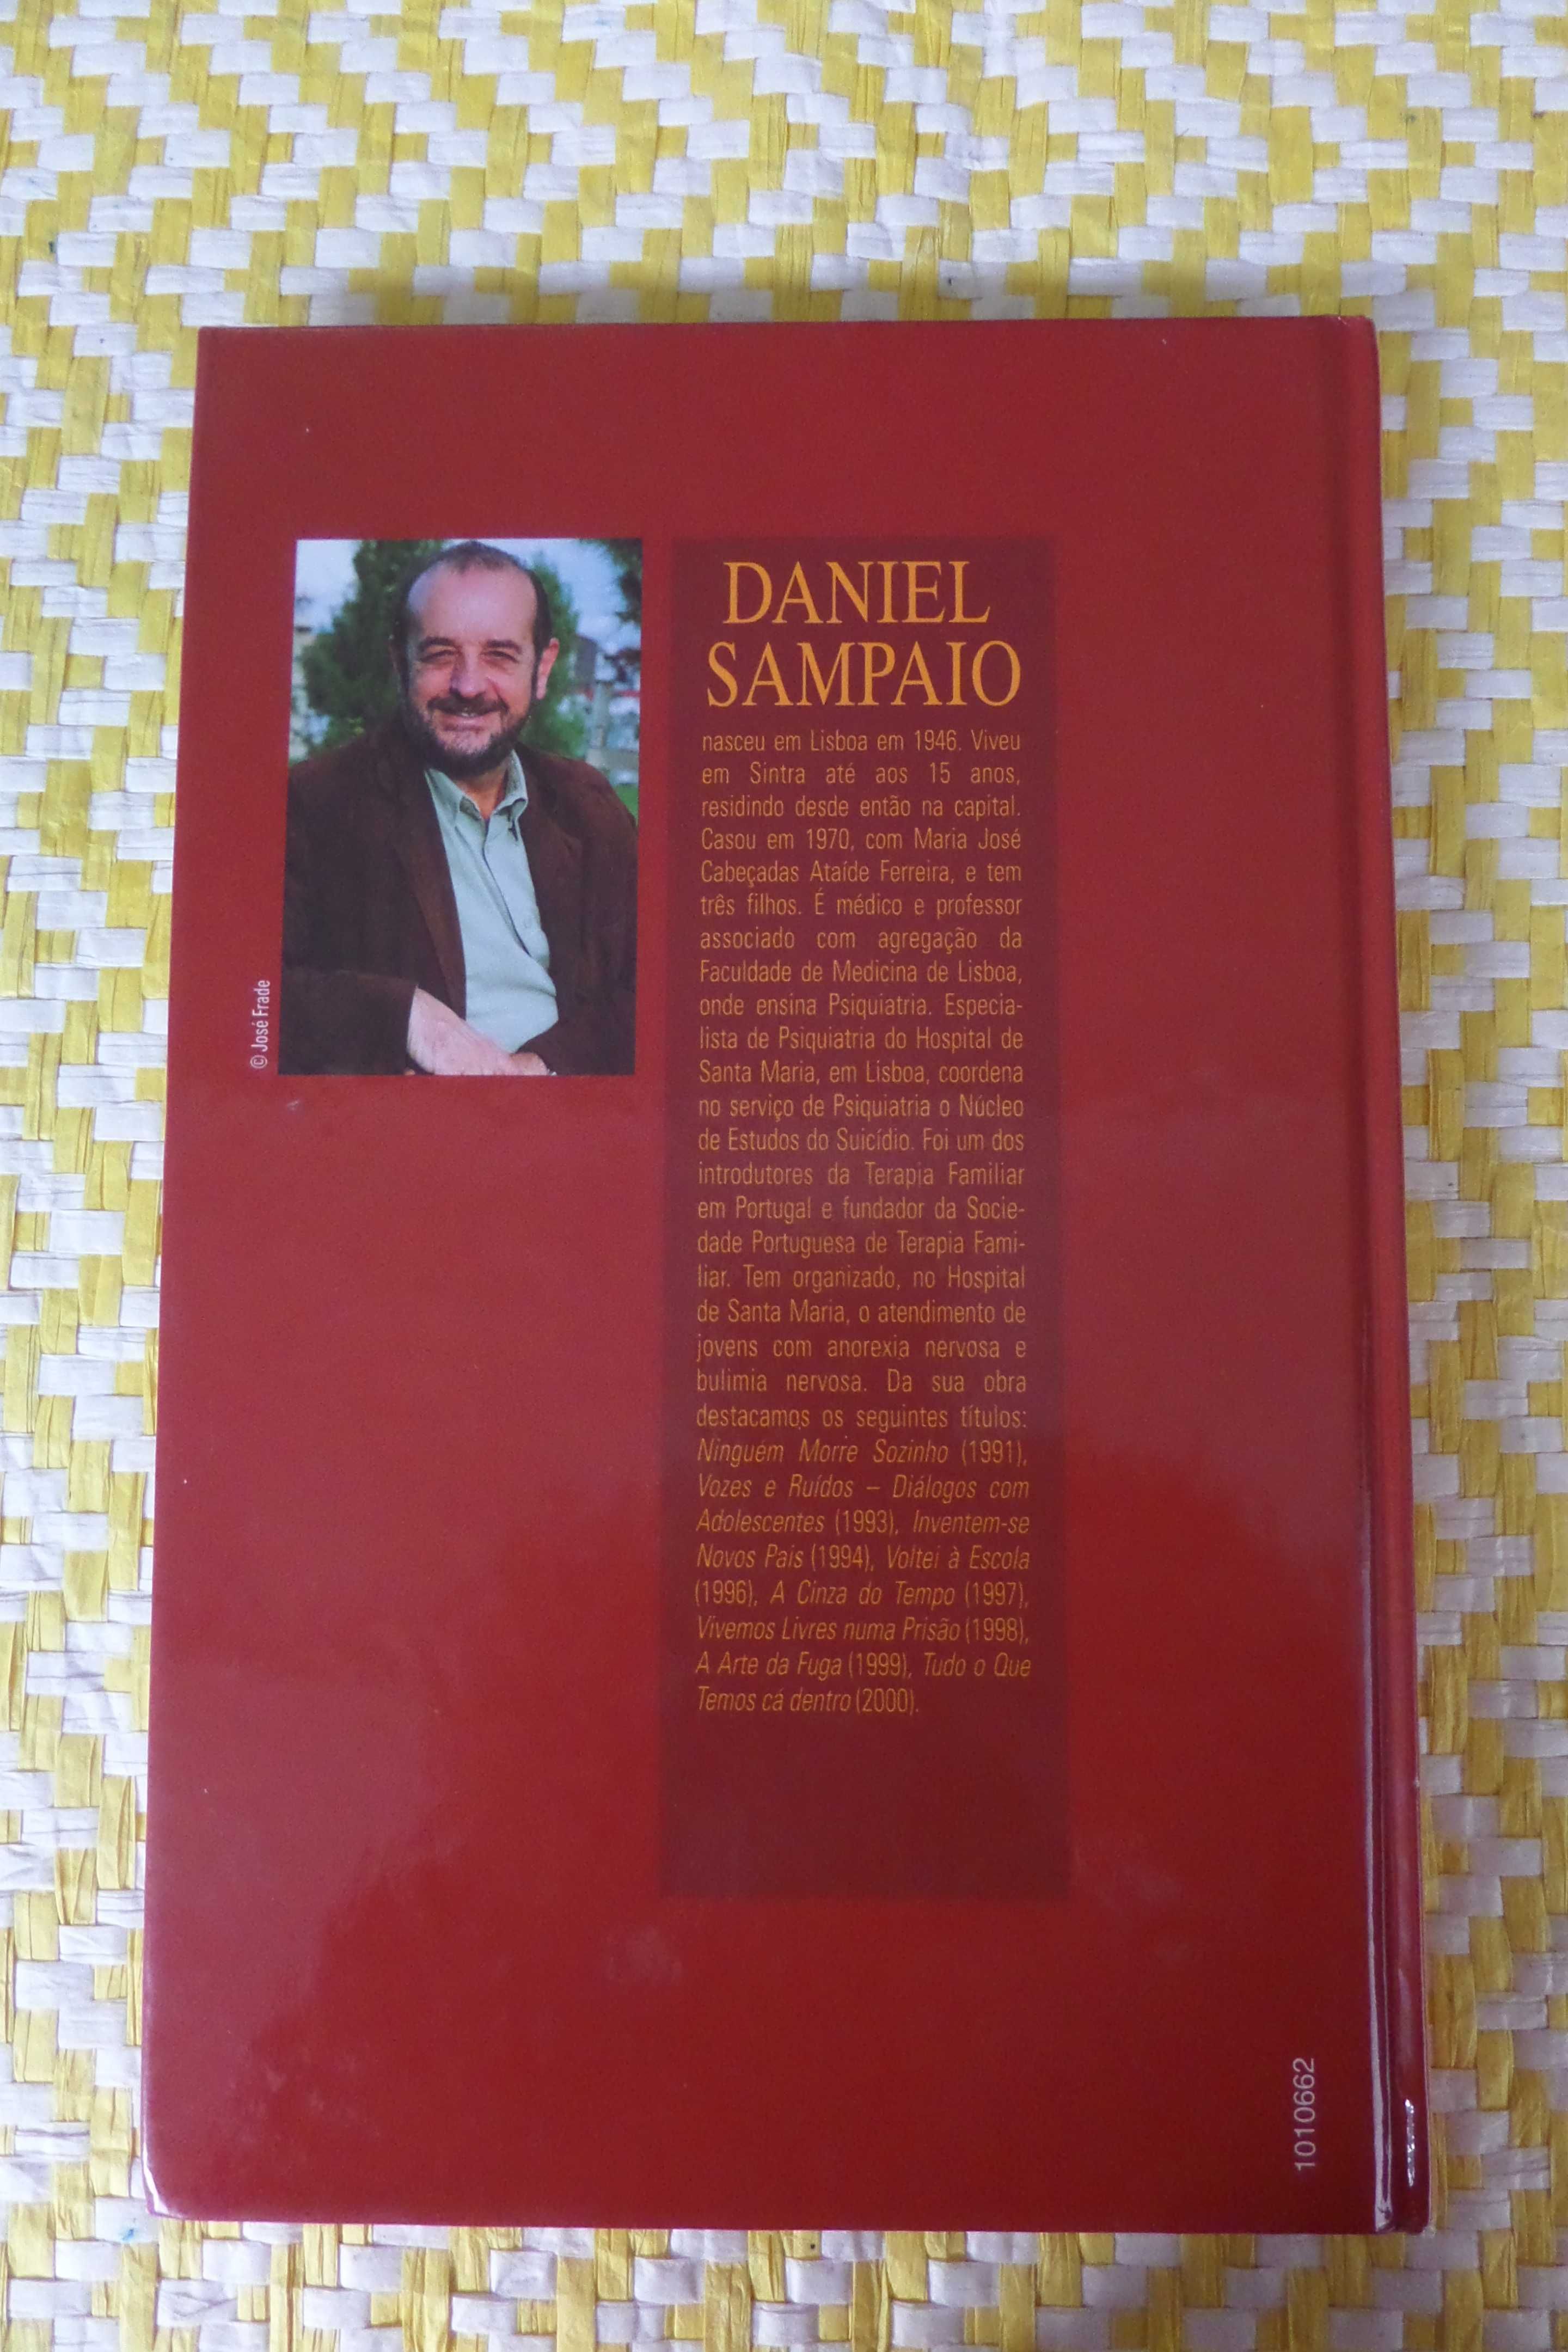 Tudo o que temos dentro 
Daniel Sampaio